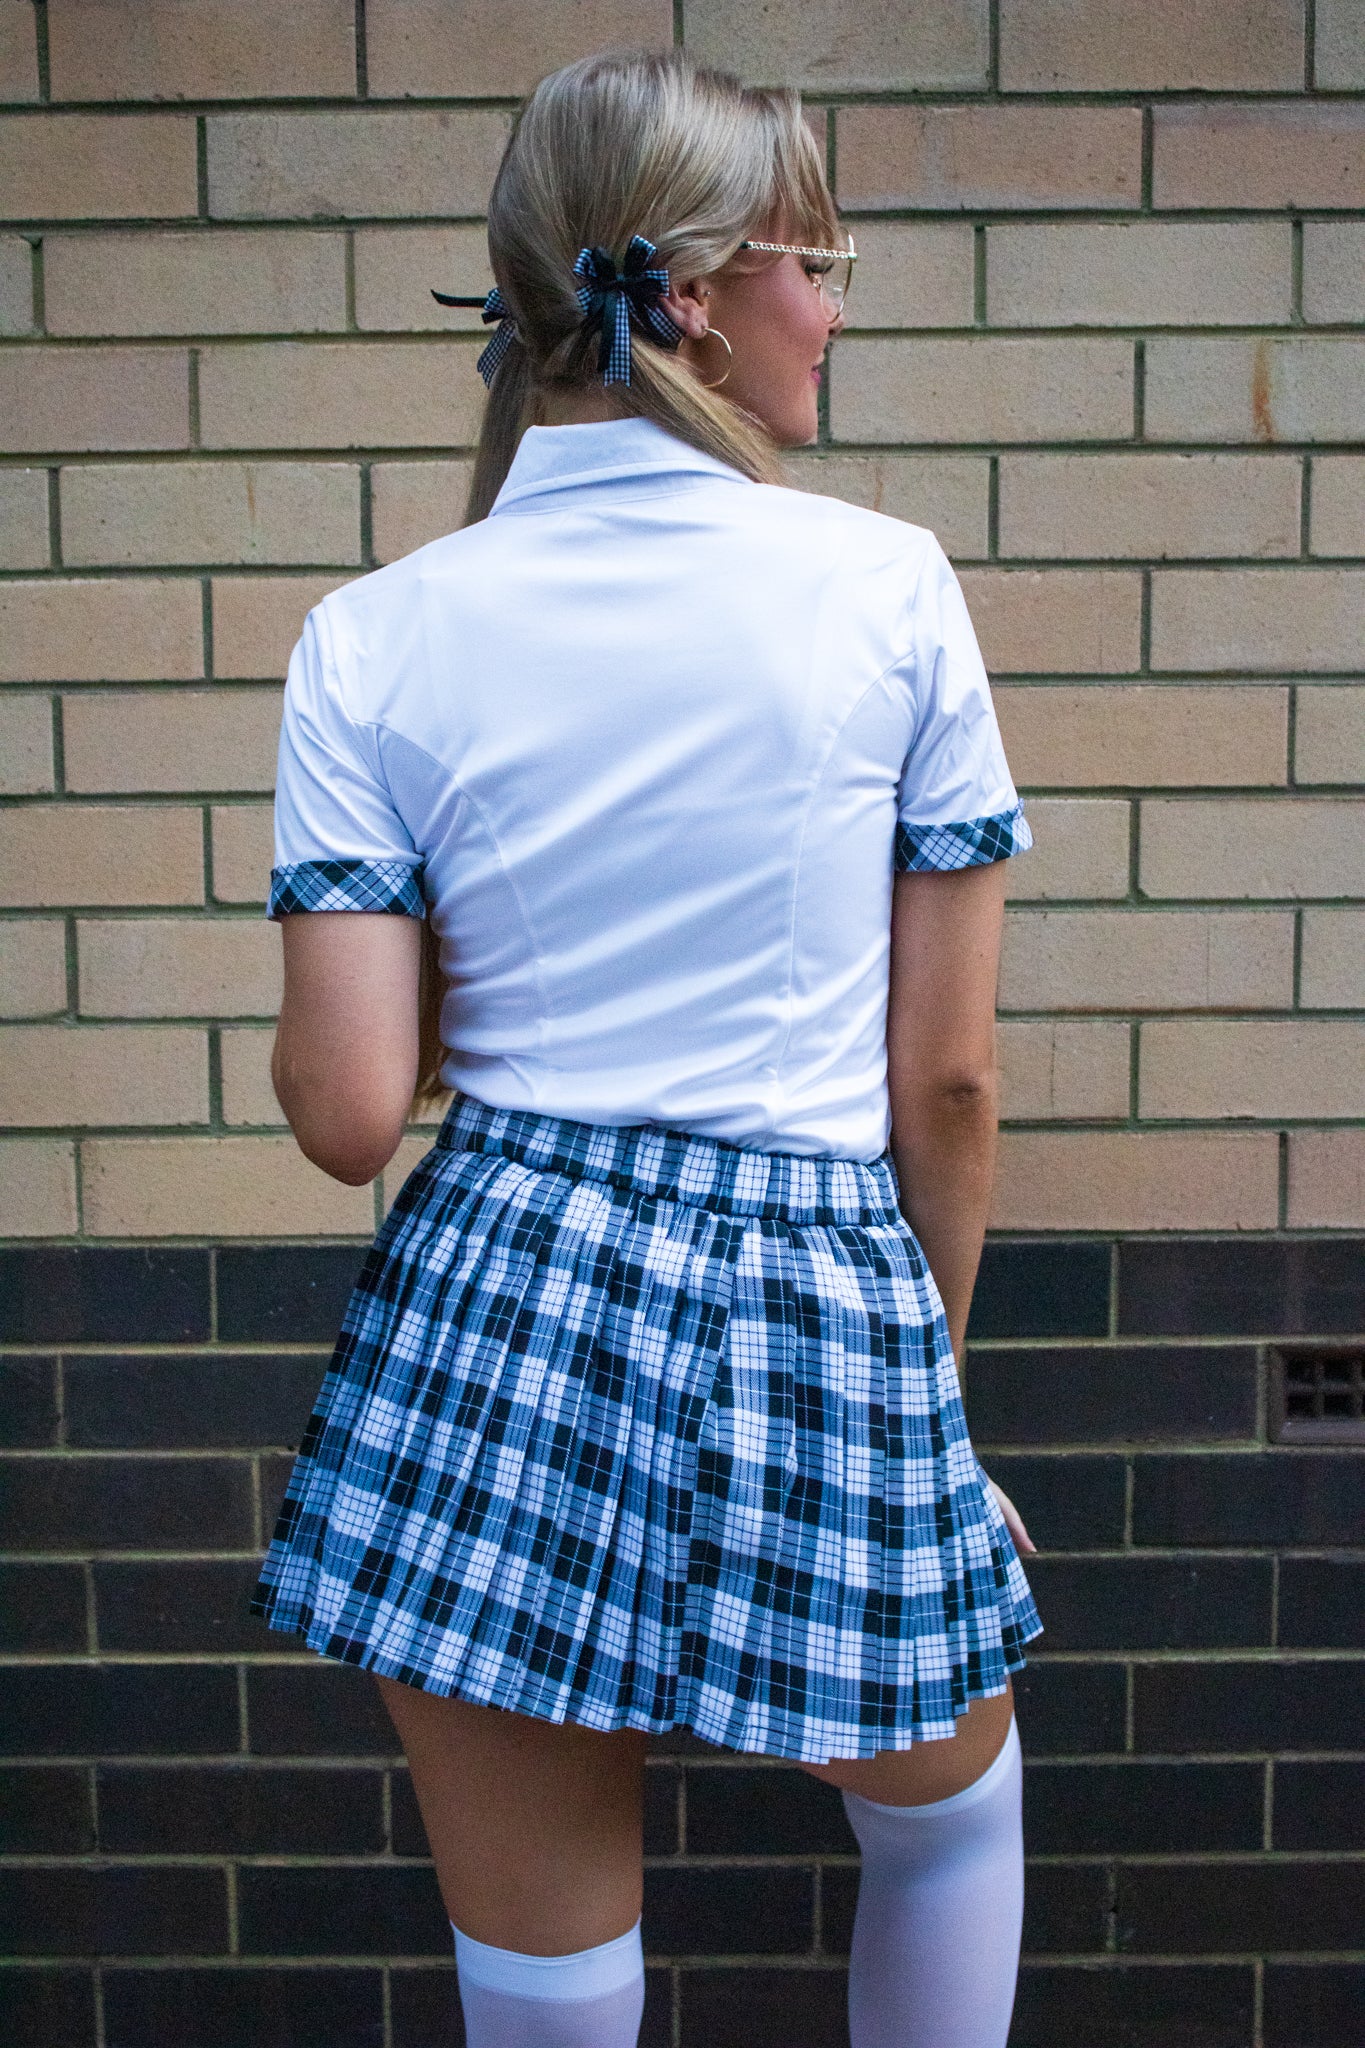 Sexi School Videos - Sexy School Girl Costume Perth | Hurly Burly â€“ Hurly-Burly